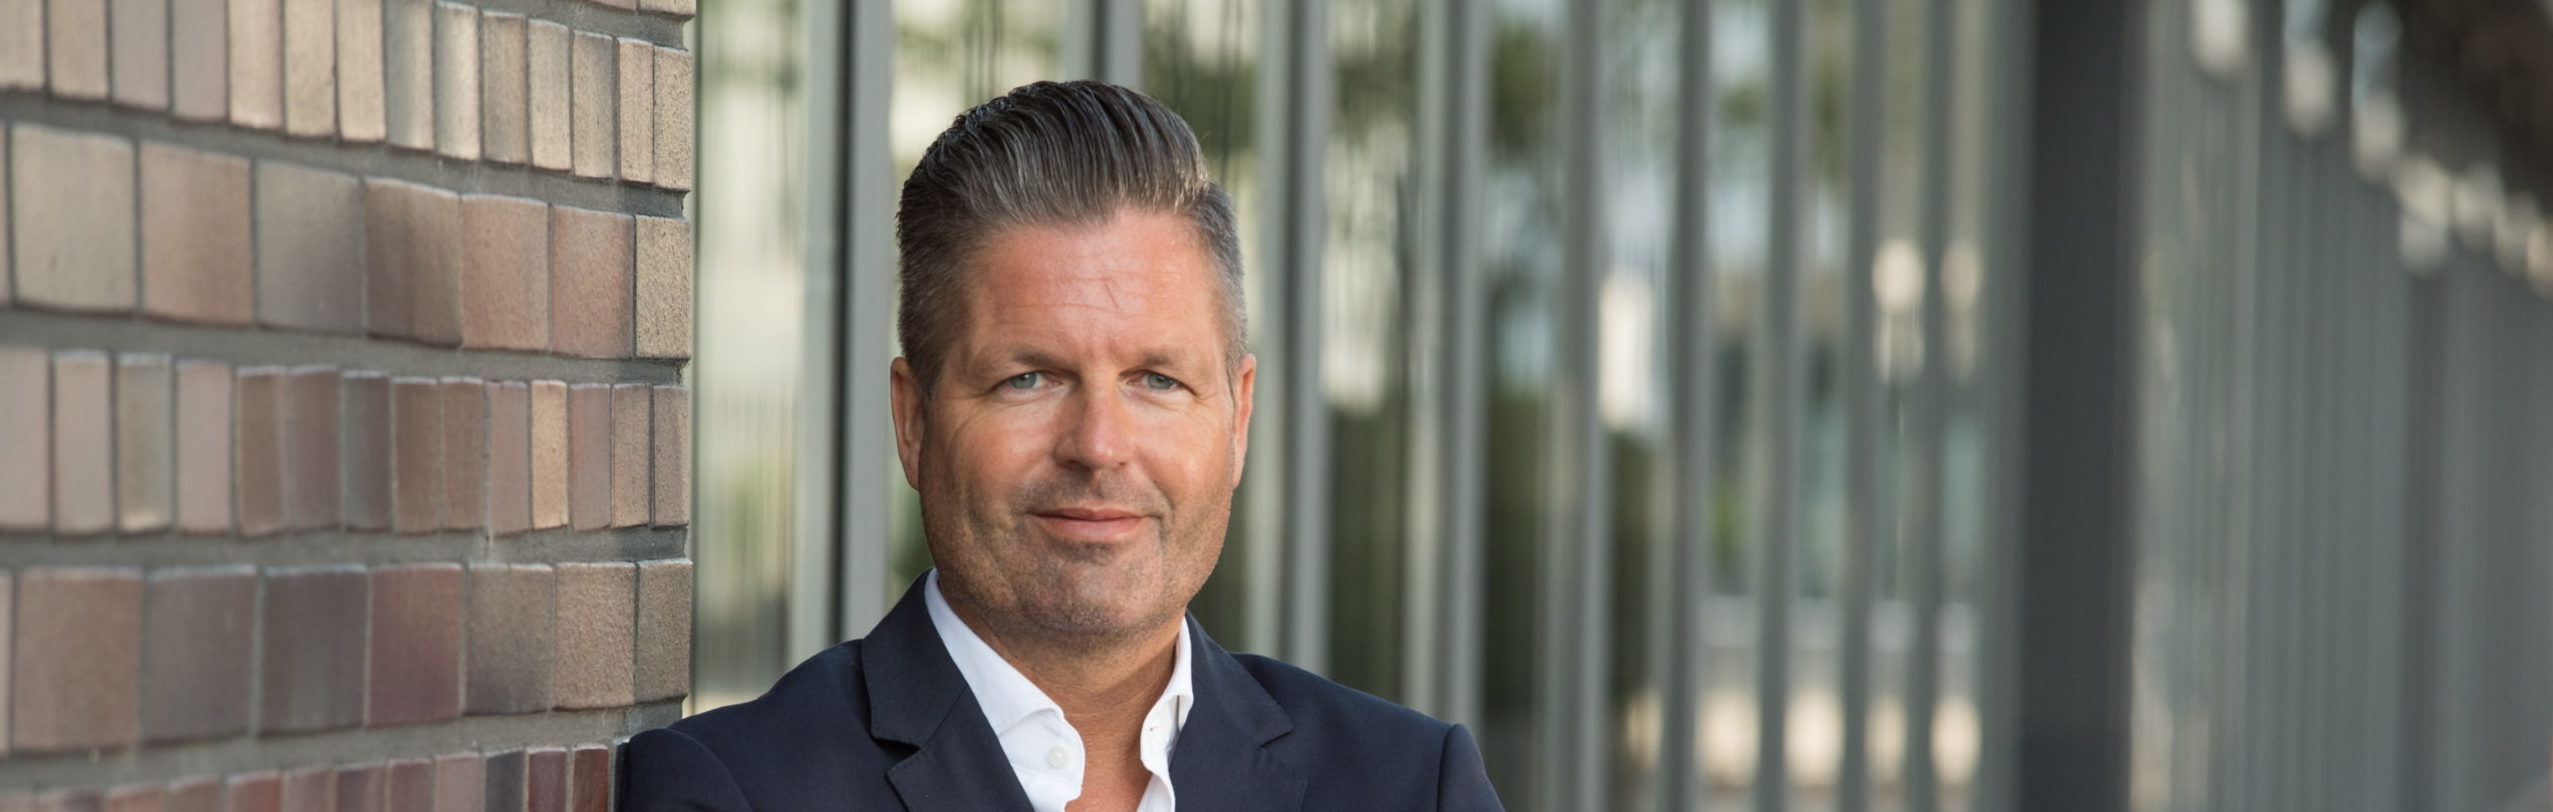 Smart Paws GmbH nomme Sven Isenberg au Poste de Chief Executive Officer